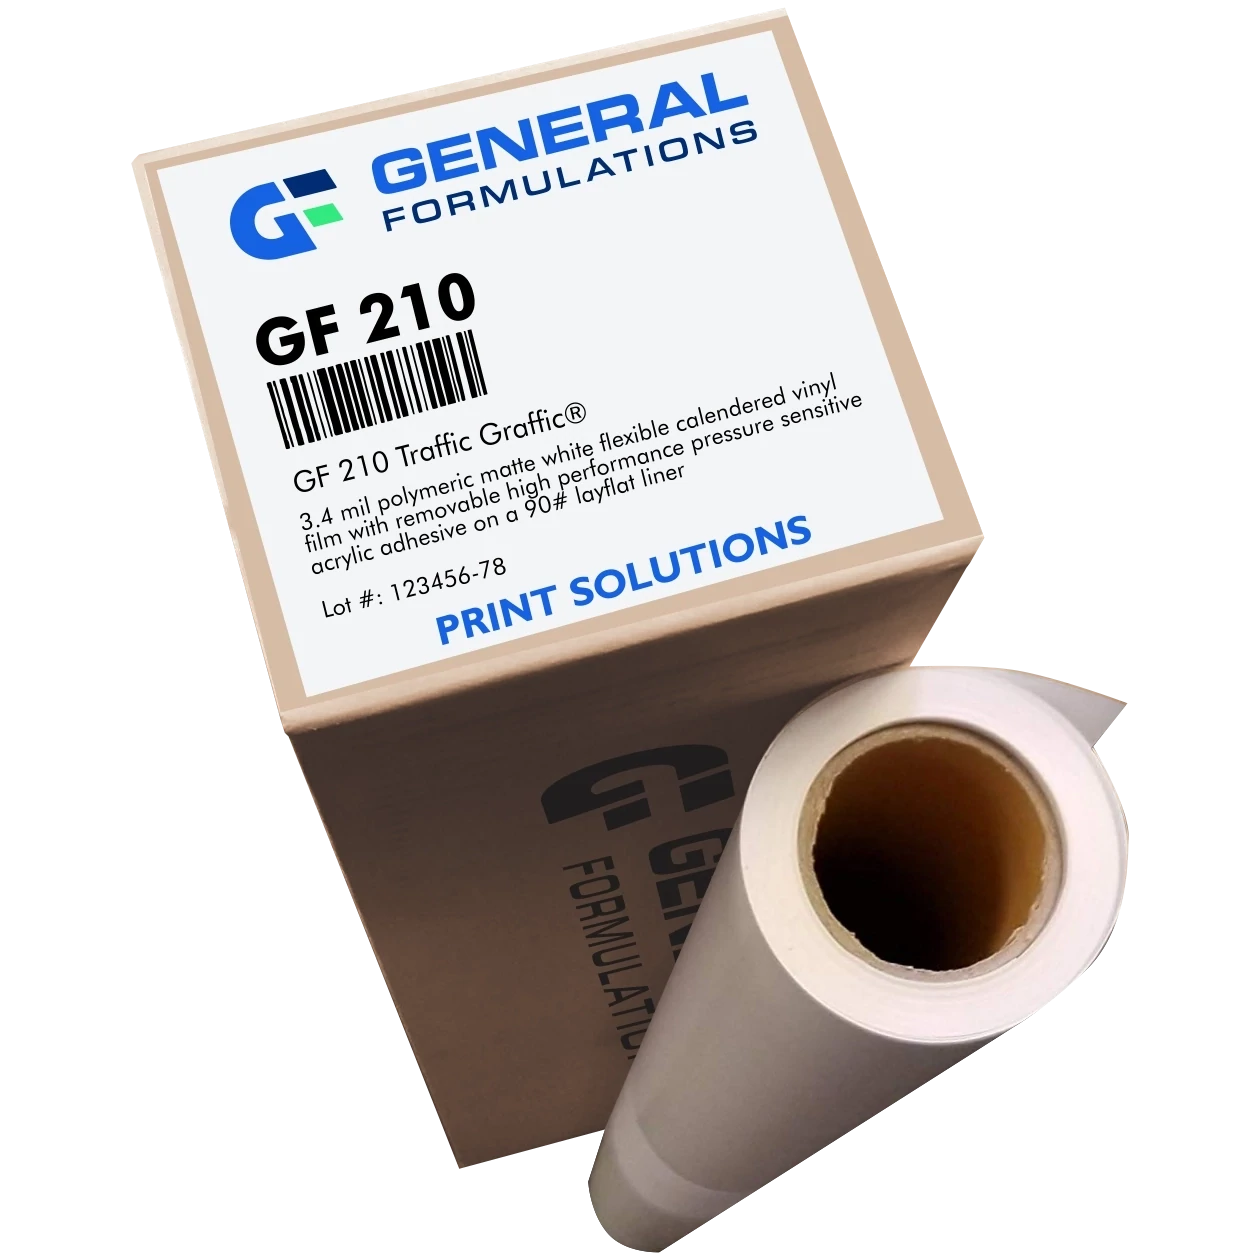 General Formulations 210 Traffic Graffic® Matte White Vinyl - High-Tack Removable, Select Size: 54" x 150'